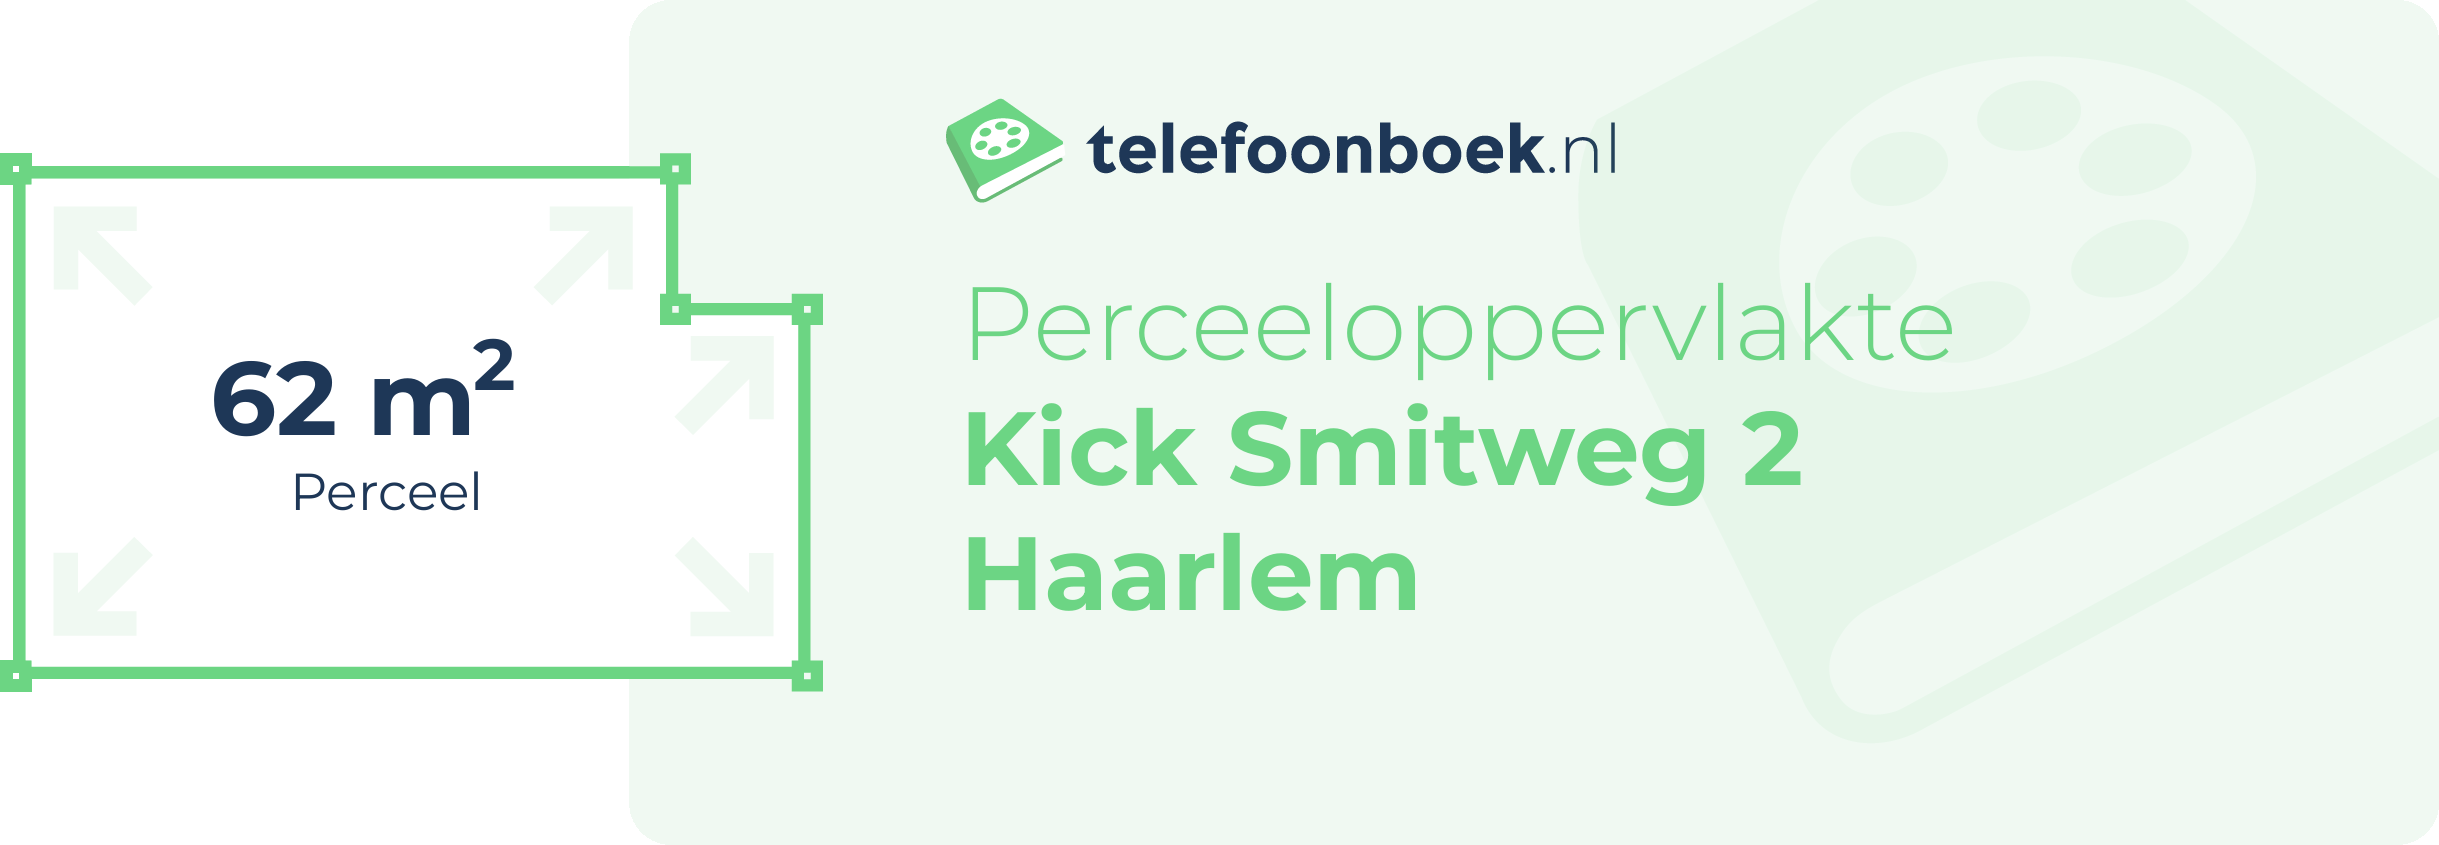 Perceeloppervlakte Kick Smitweg 2 Haarlem